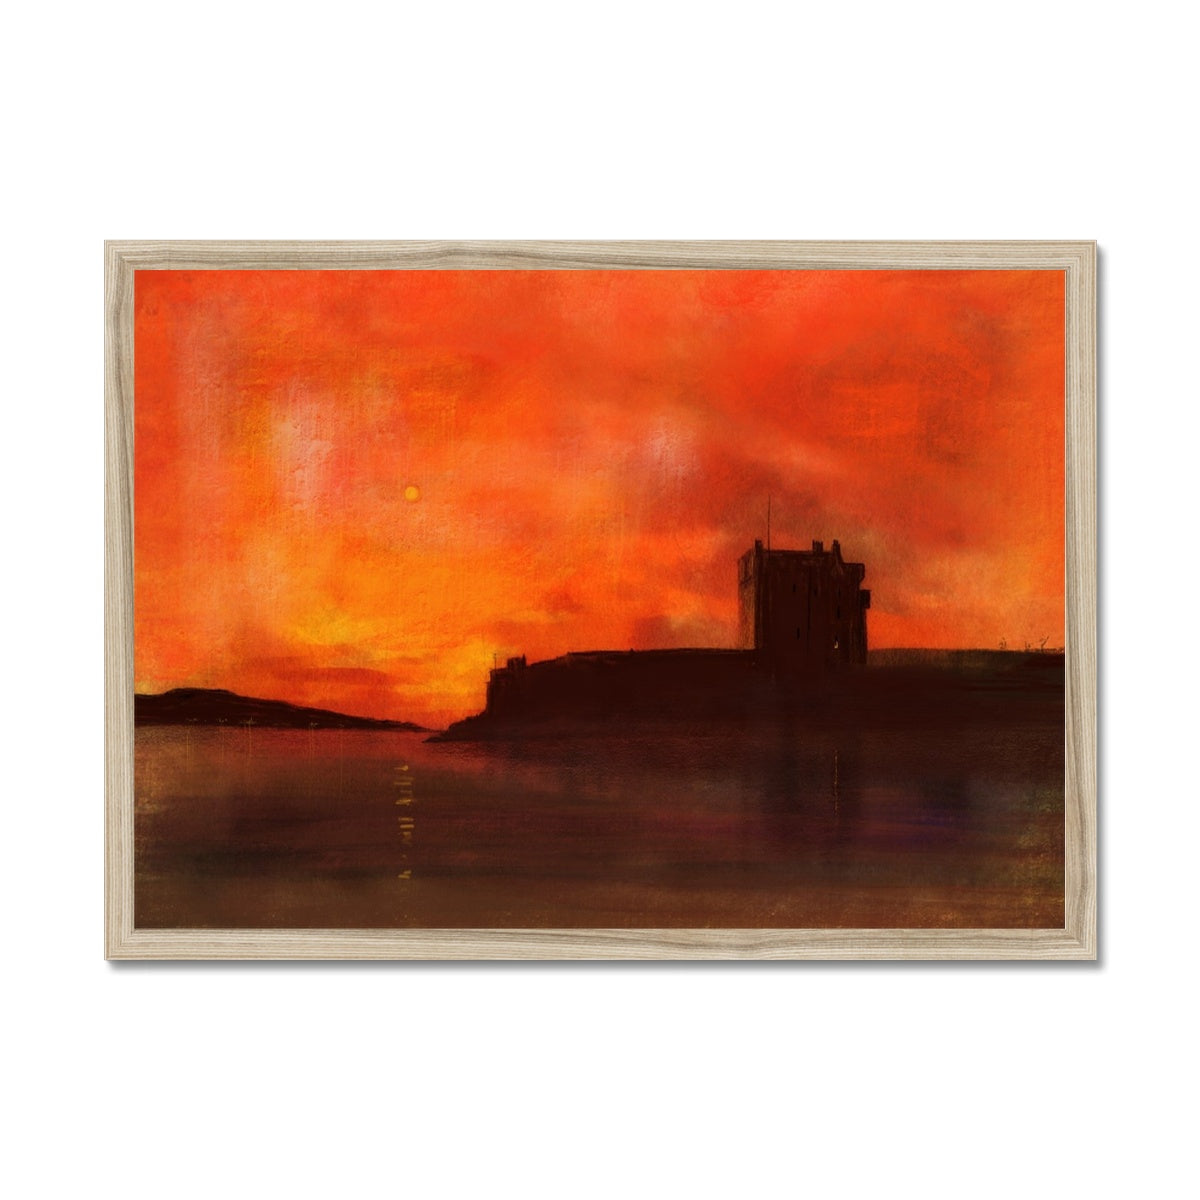 Broughty Castle Sunset Painting | Framed Prints From Scotland-Framed Prints-Scottish Castles Art Gallery-A2 Landscape-Natural Frame-Paintings, Prints, Homeware, Art Gifts From Scotland By Scottish Artist Kevin Hunter